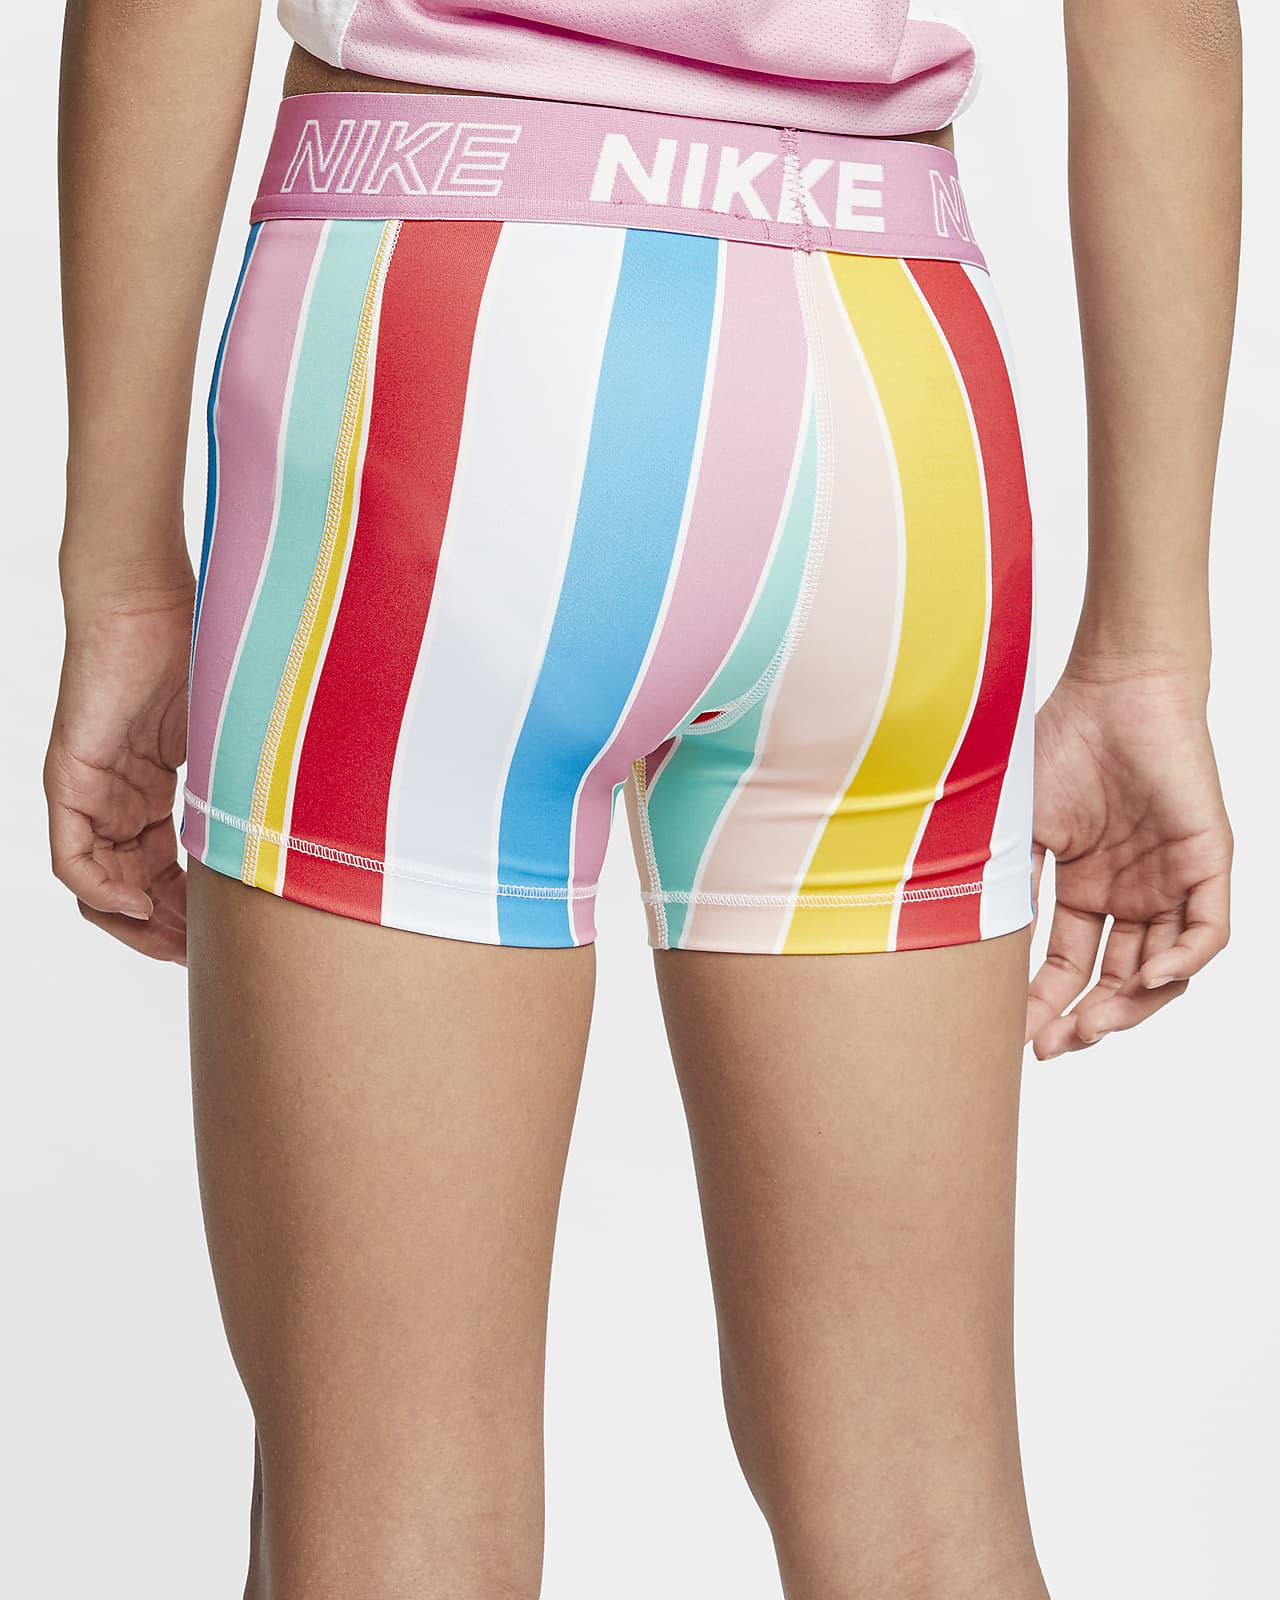 nike compression shorts kids